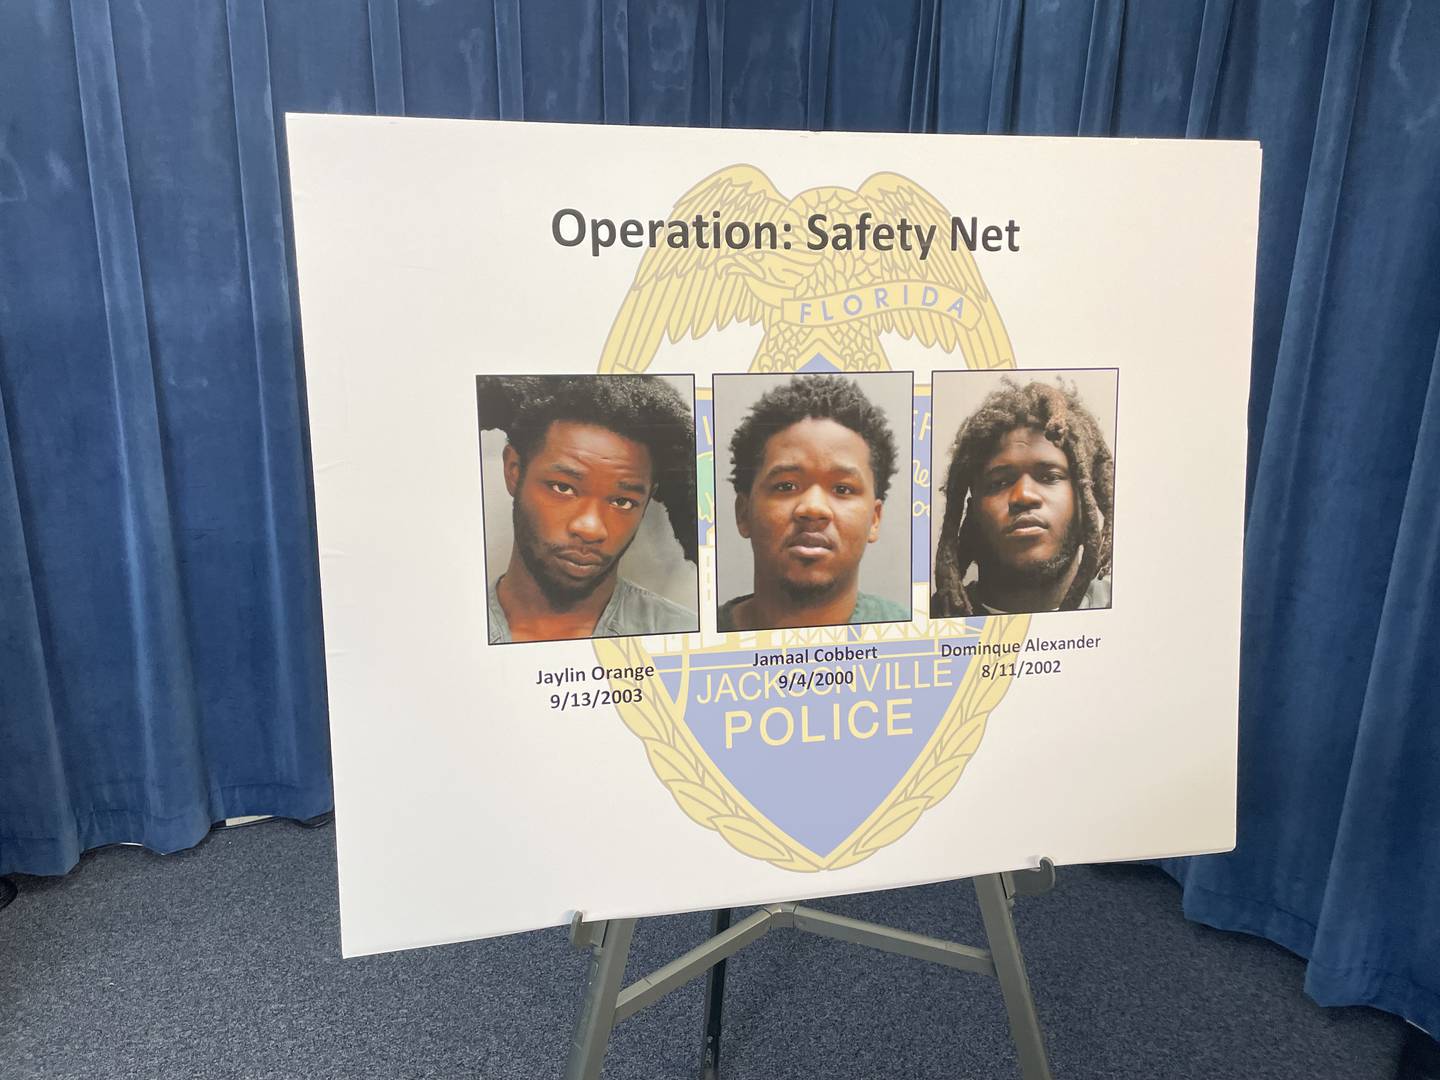 Jaylin Orange, Jamaal Cobbert and Dominique Alexander were arrested in "Operation: Safety Net."